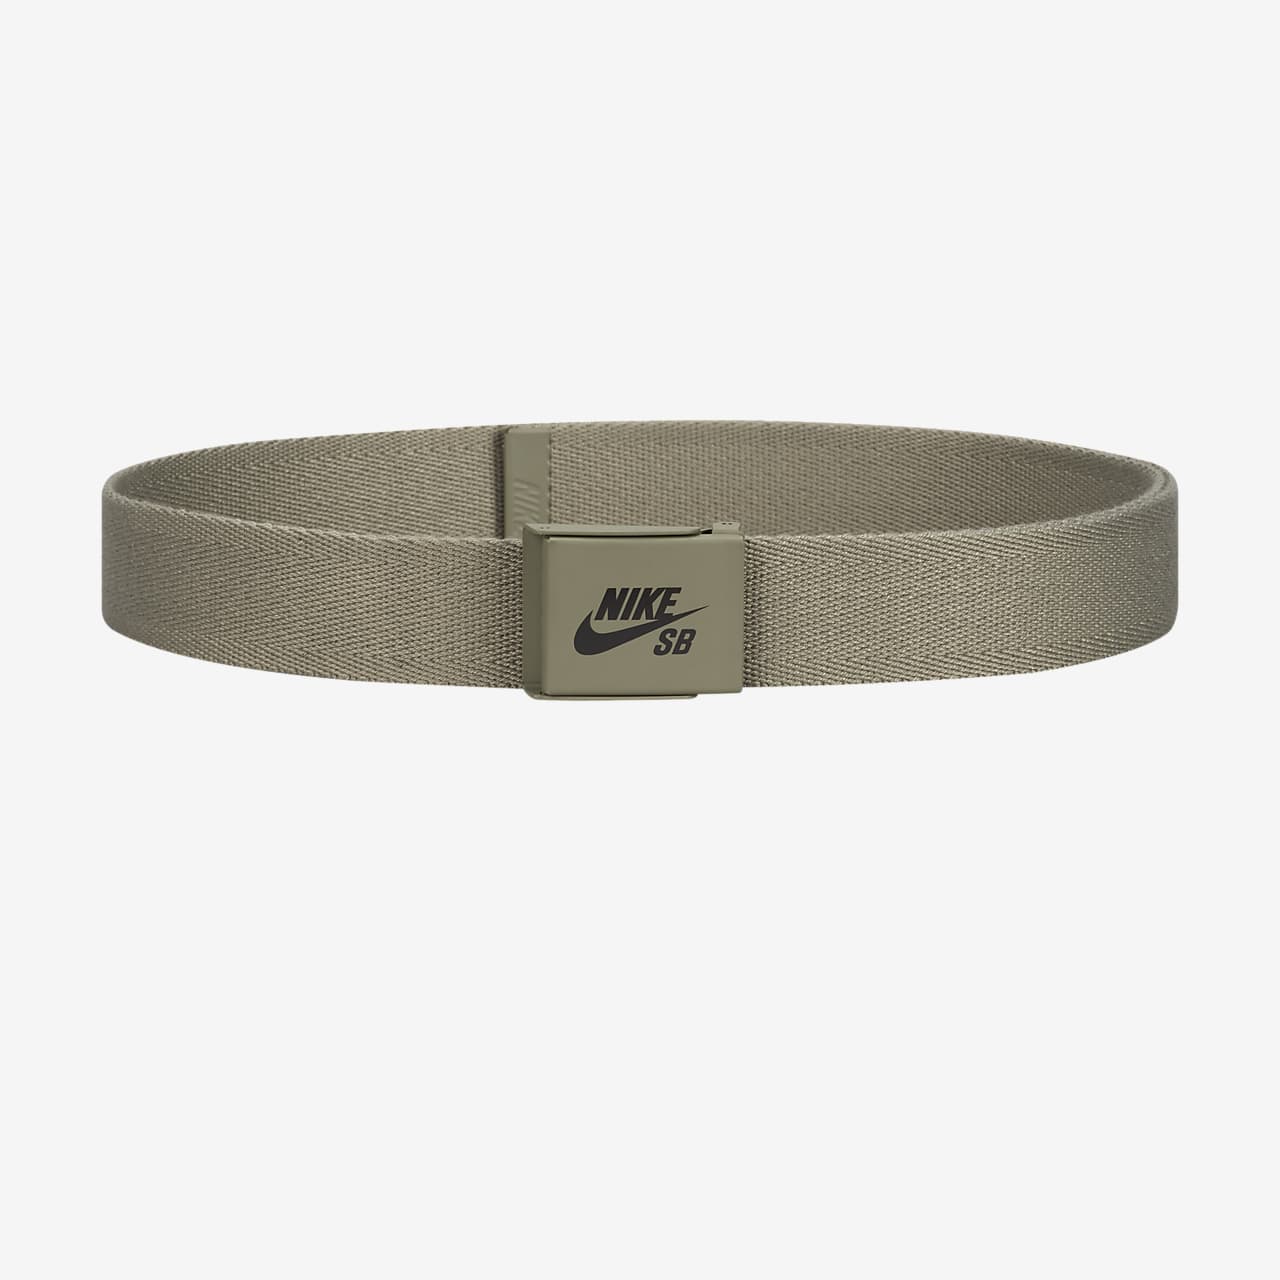 Nike SB Solid Single Web Belt